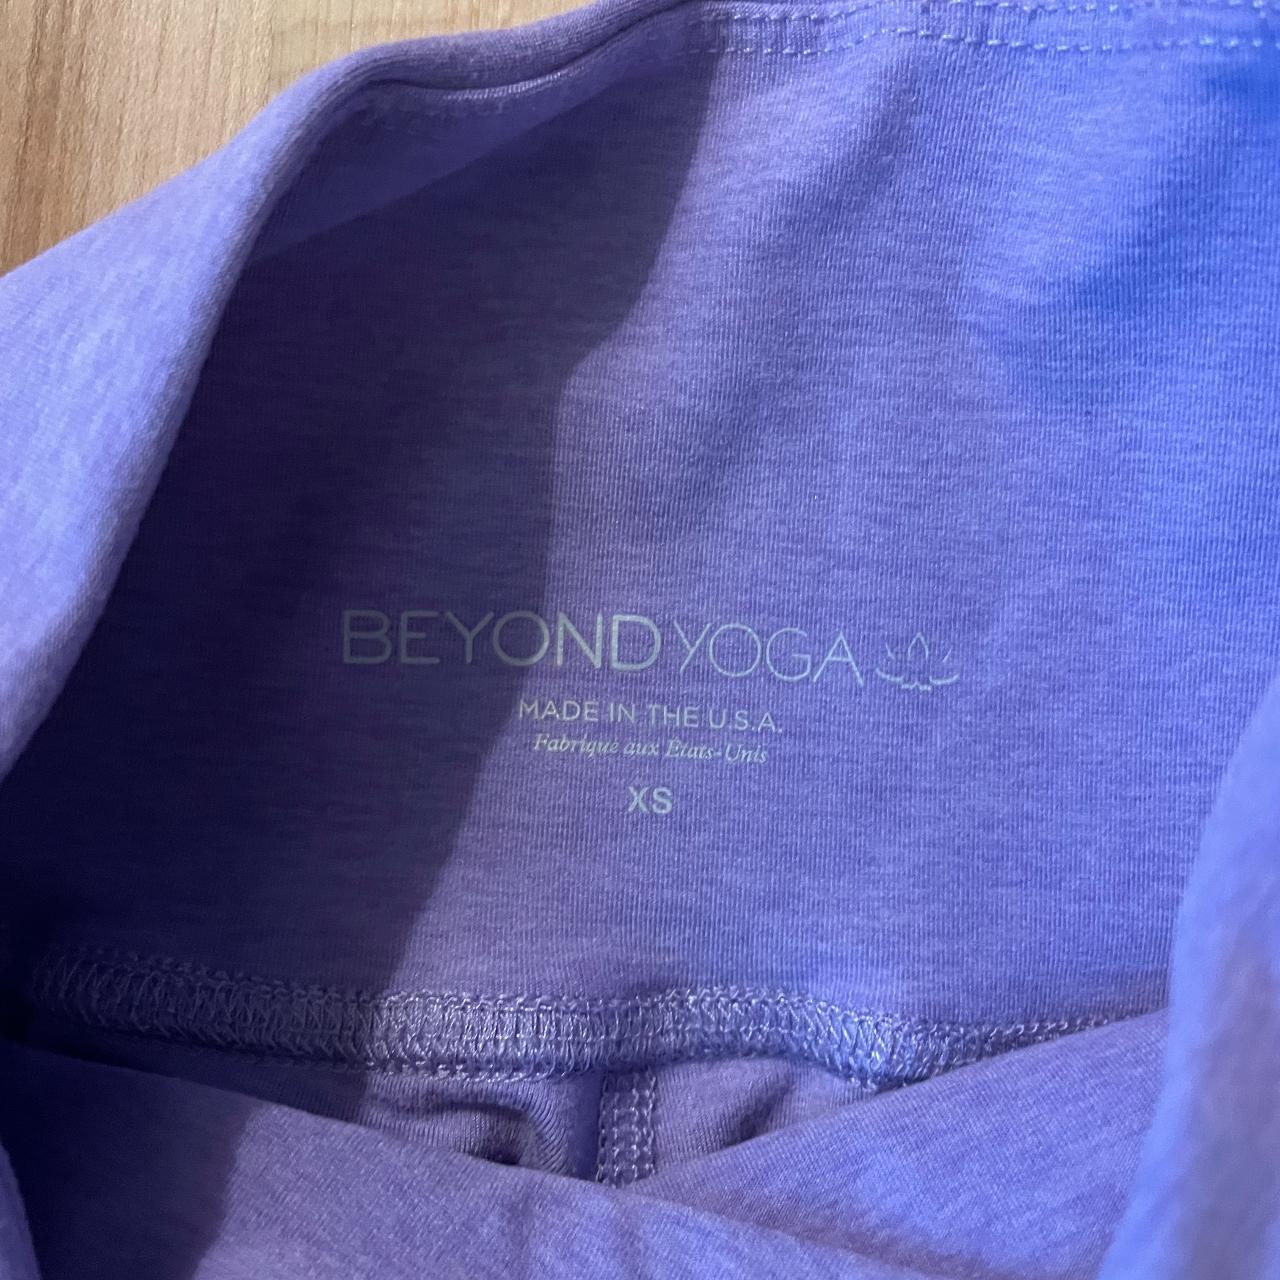 Beyond Yoga purple biker shorts - Depop